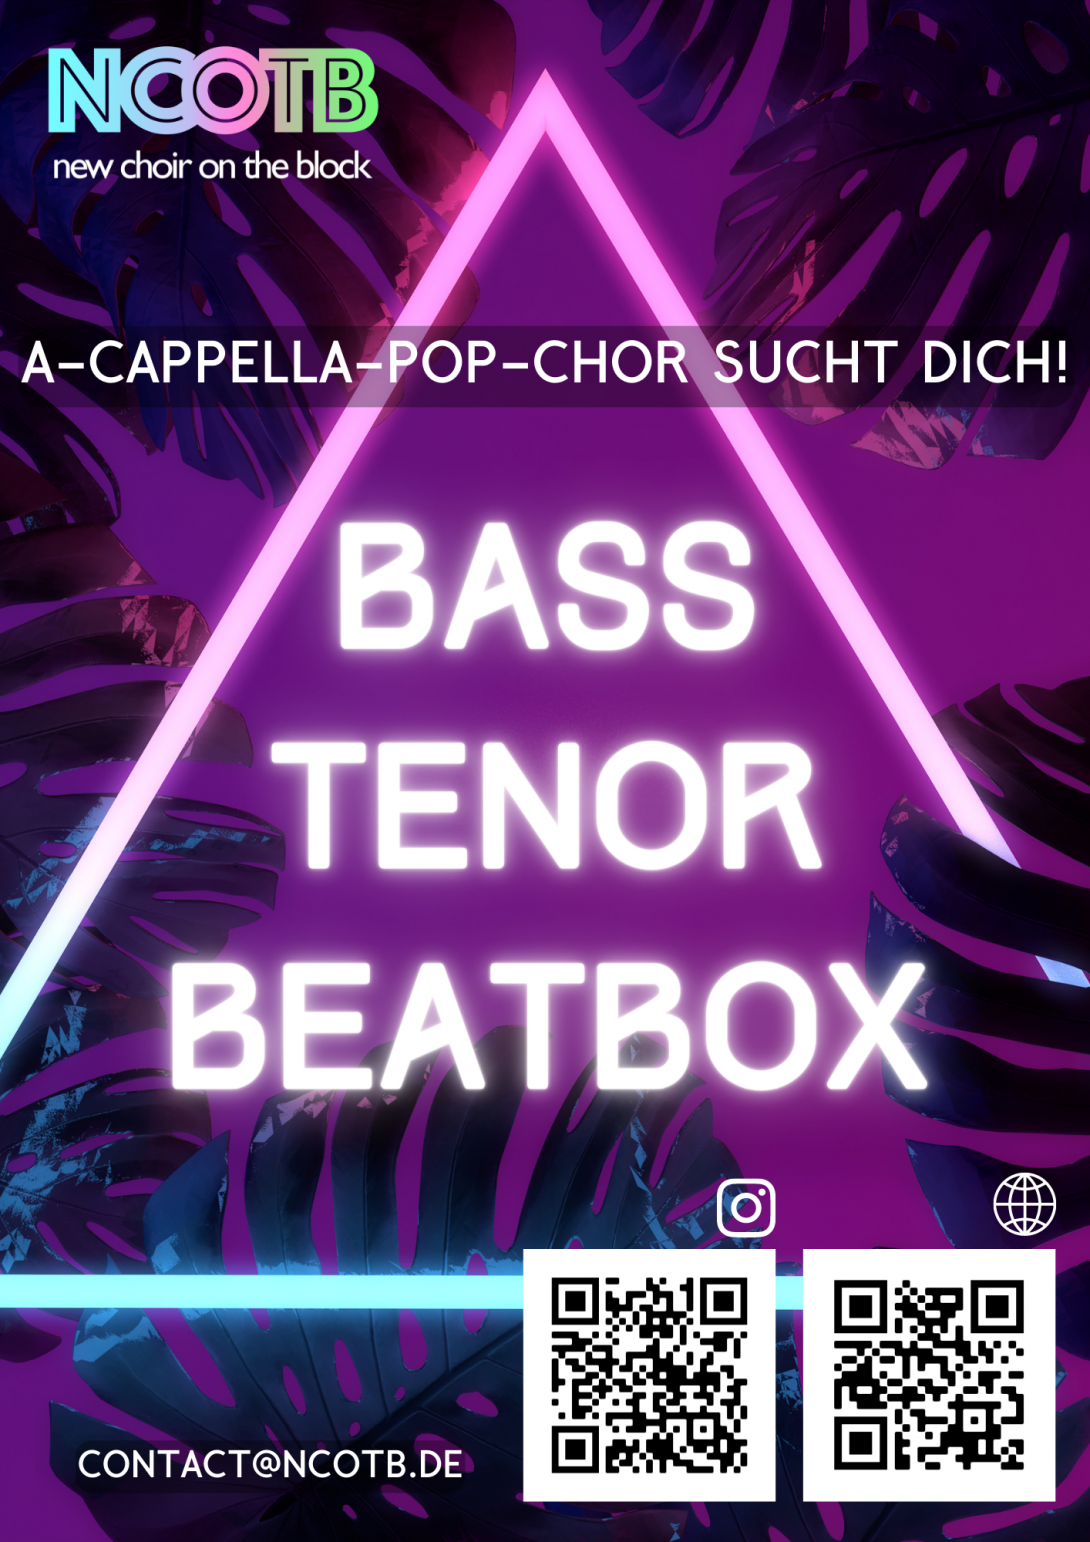 Flyer: new choir on the block sucht Bass, Beatbox und Tenor